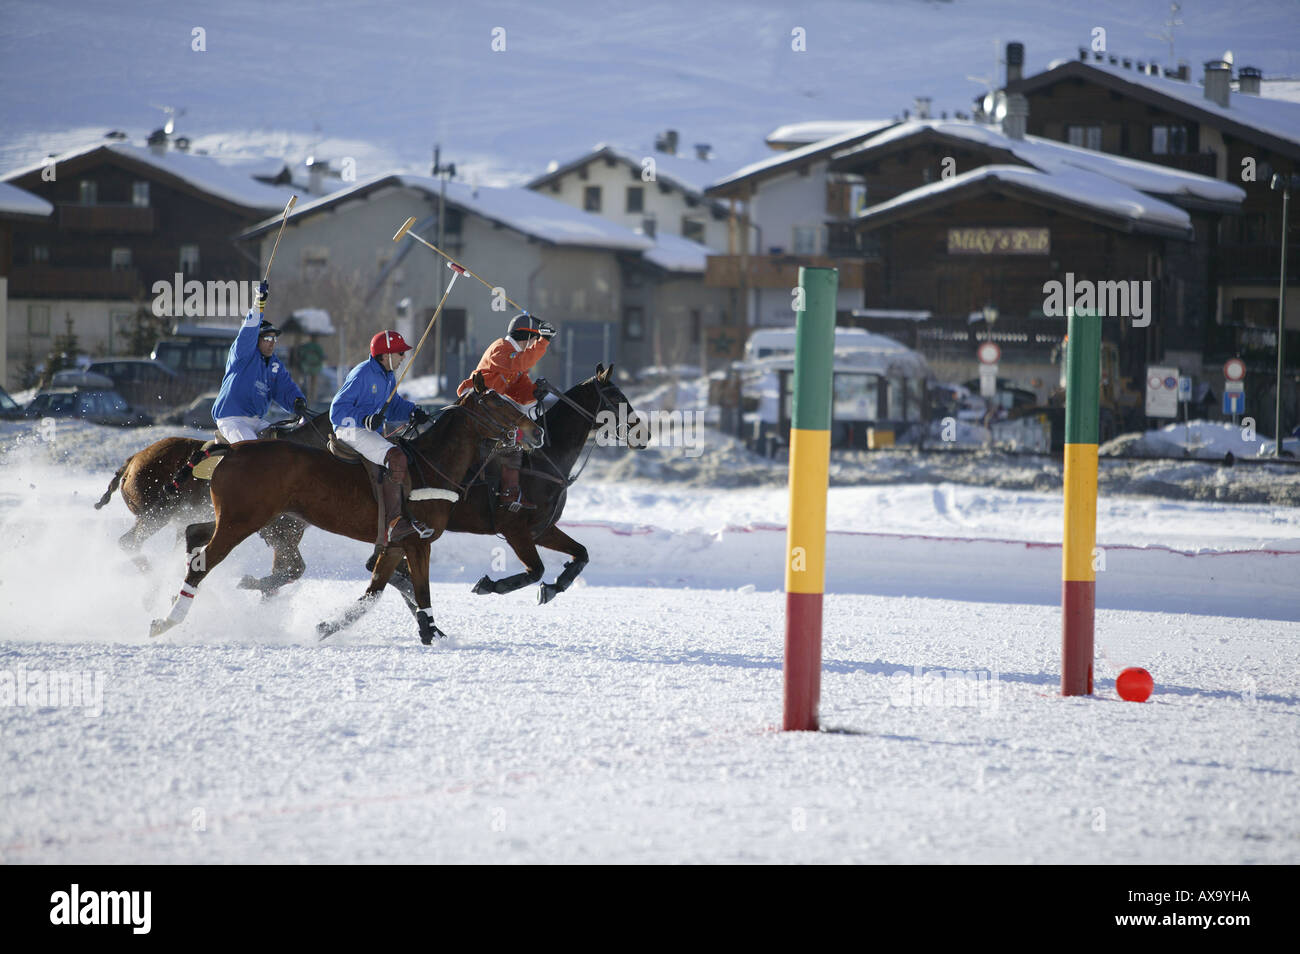 Polo on snow, International tournament in Livigno, Italy Stock Photo